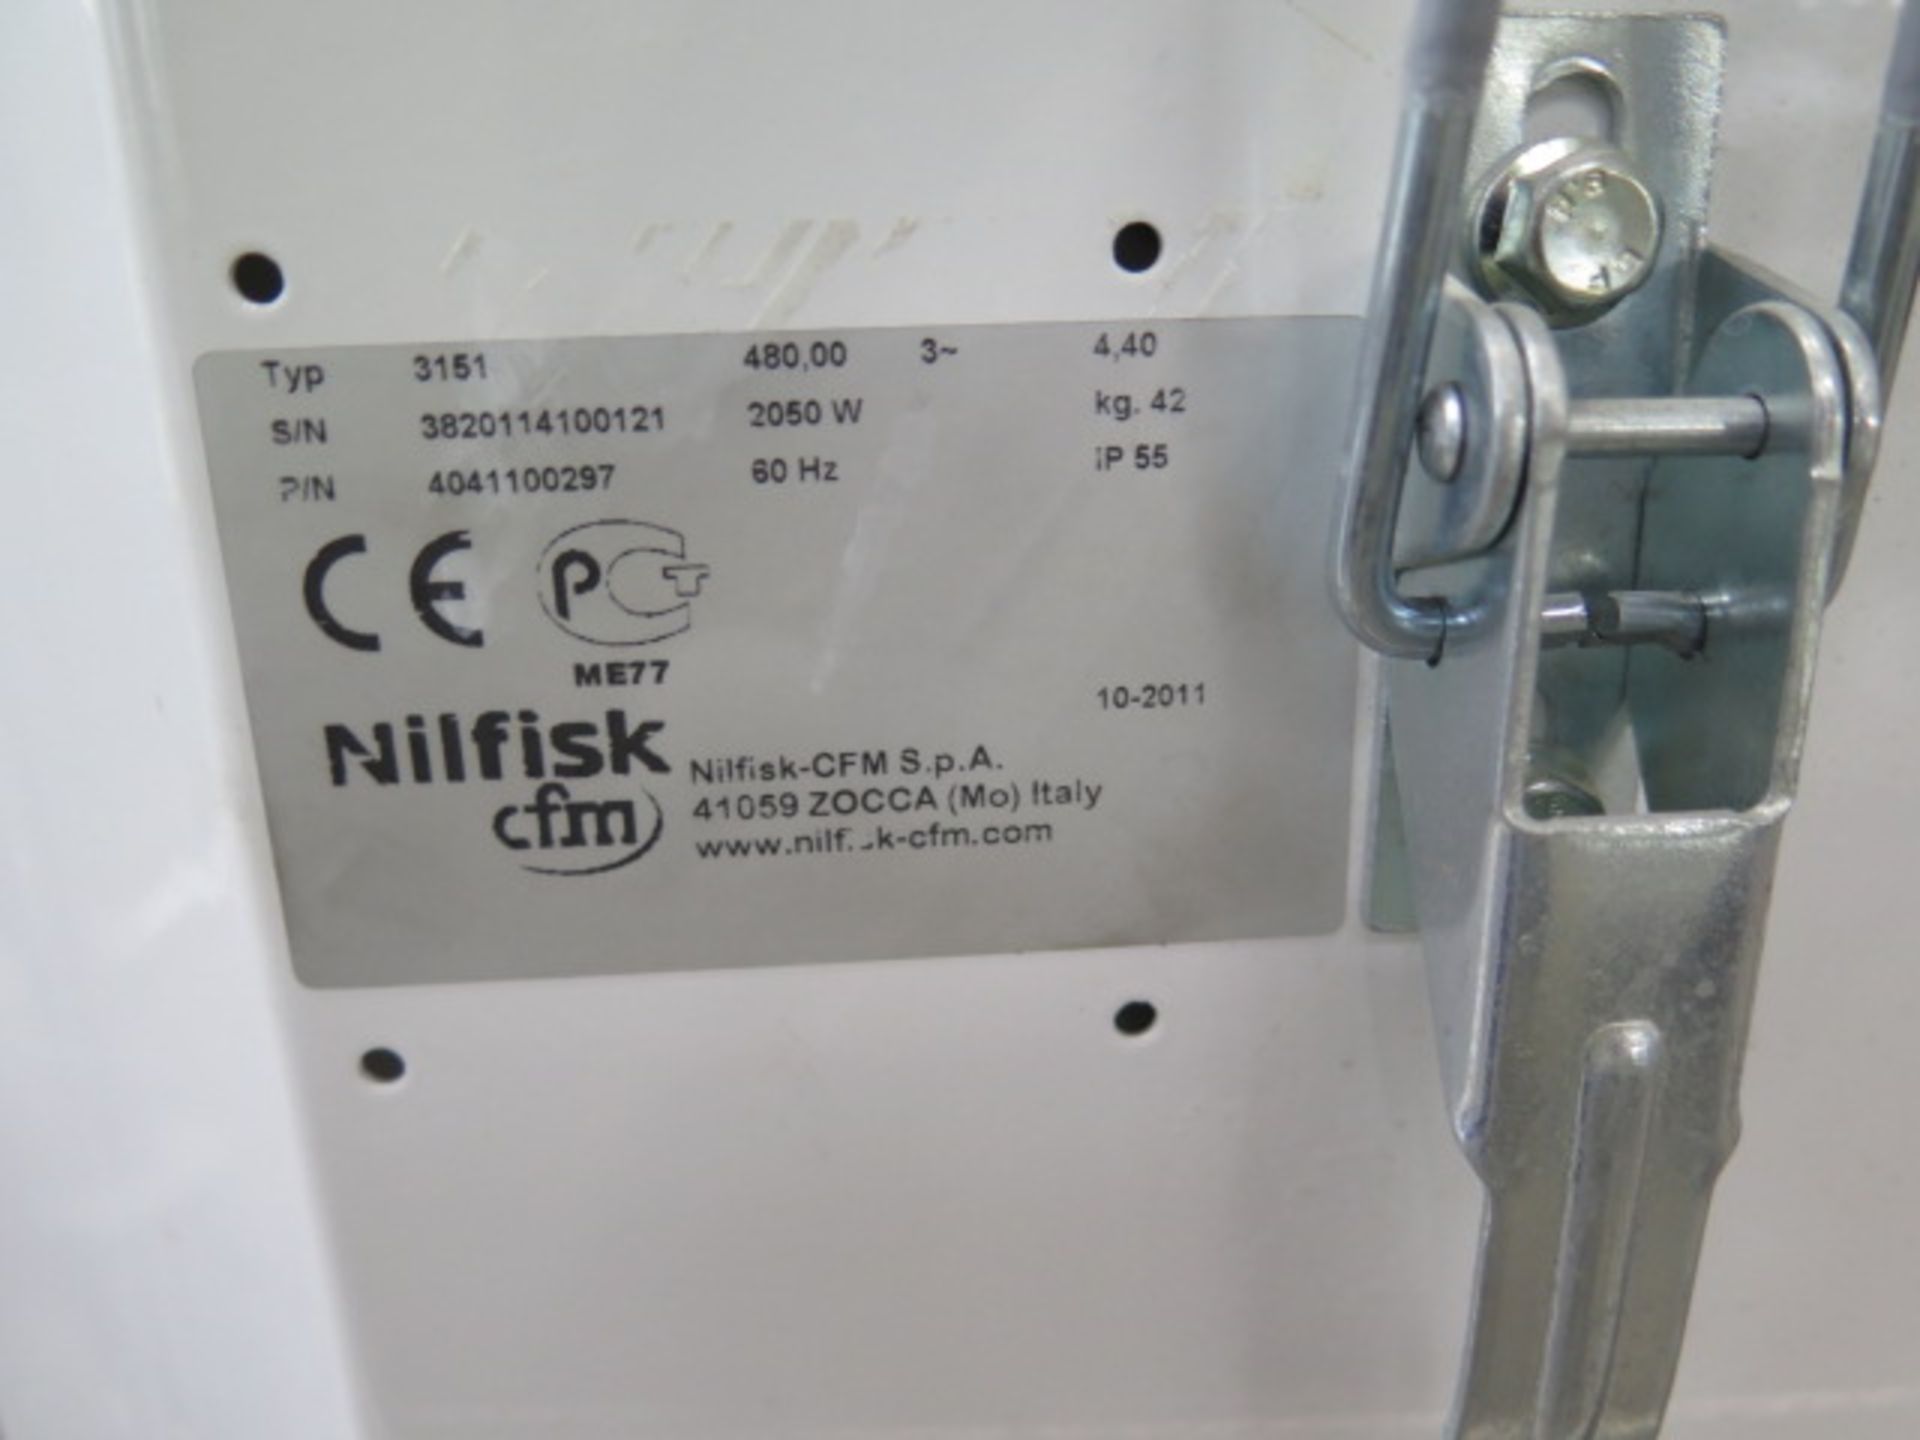 Nilfisk Type 3151 Industrial Vacuum (SOLD AS-IS - NO WARRANTY) - Image 7 of 7